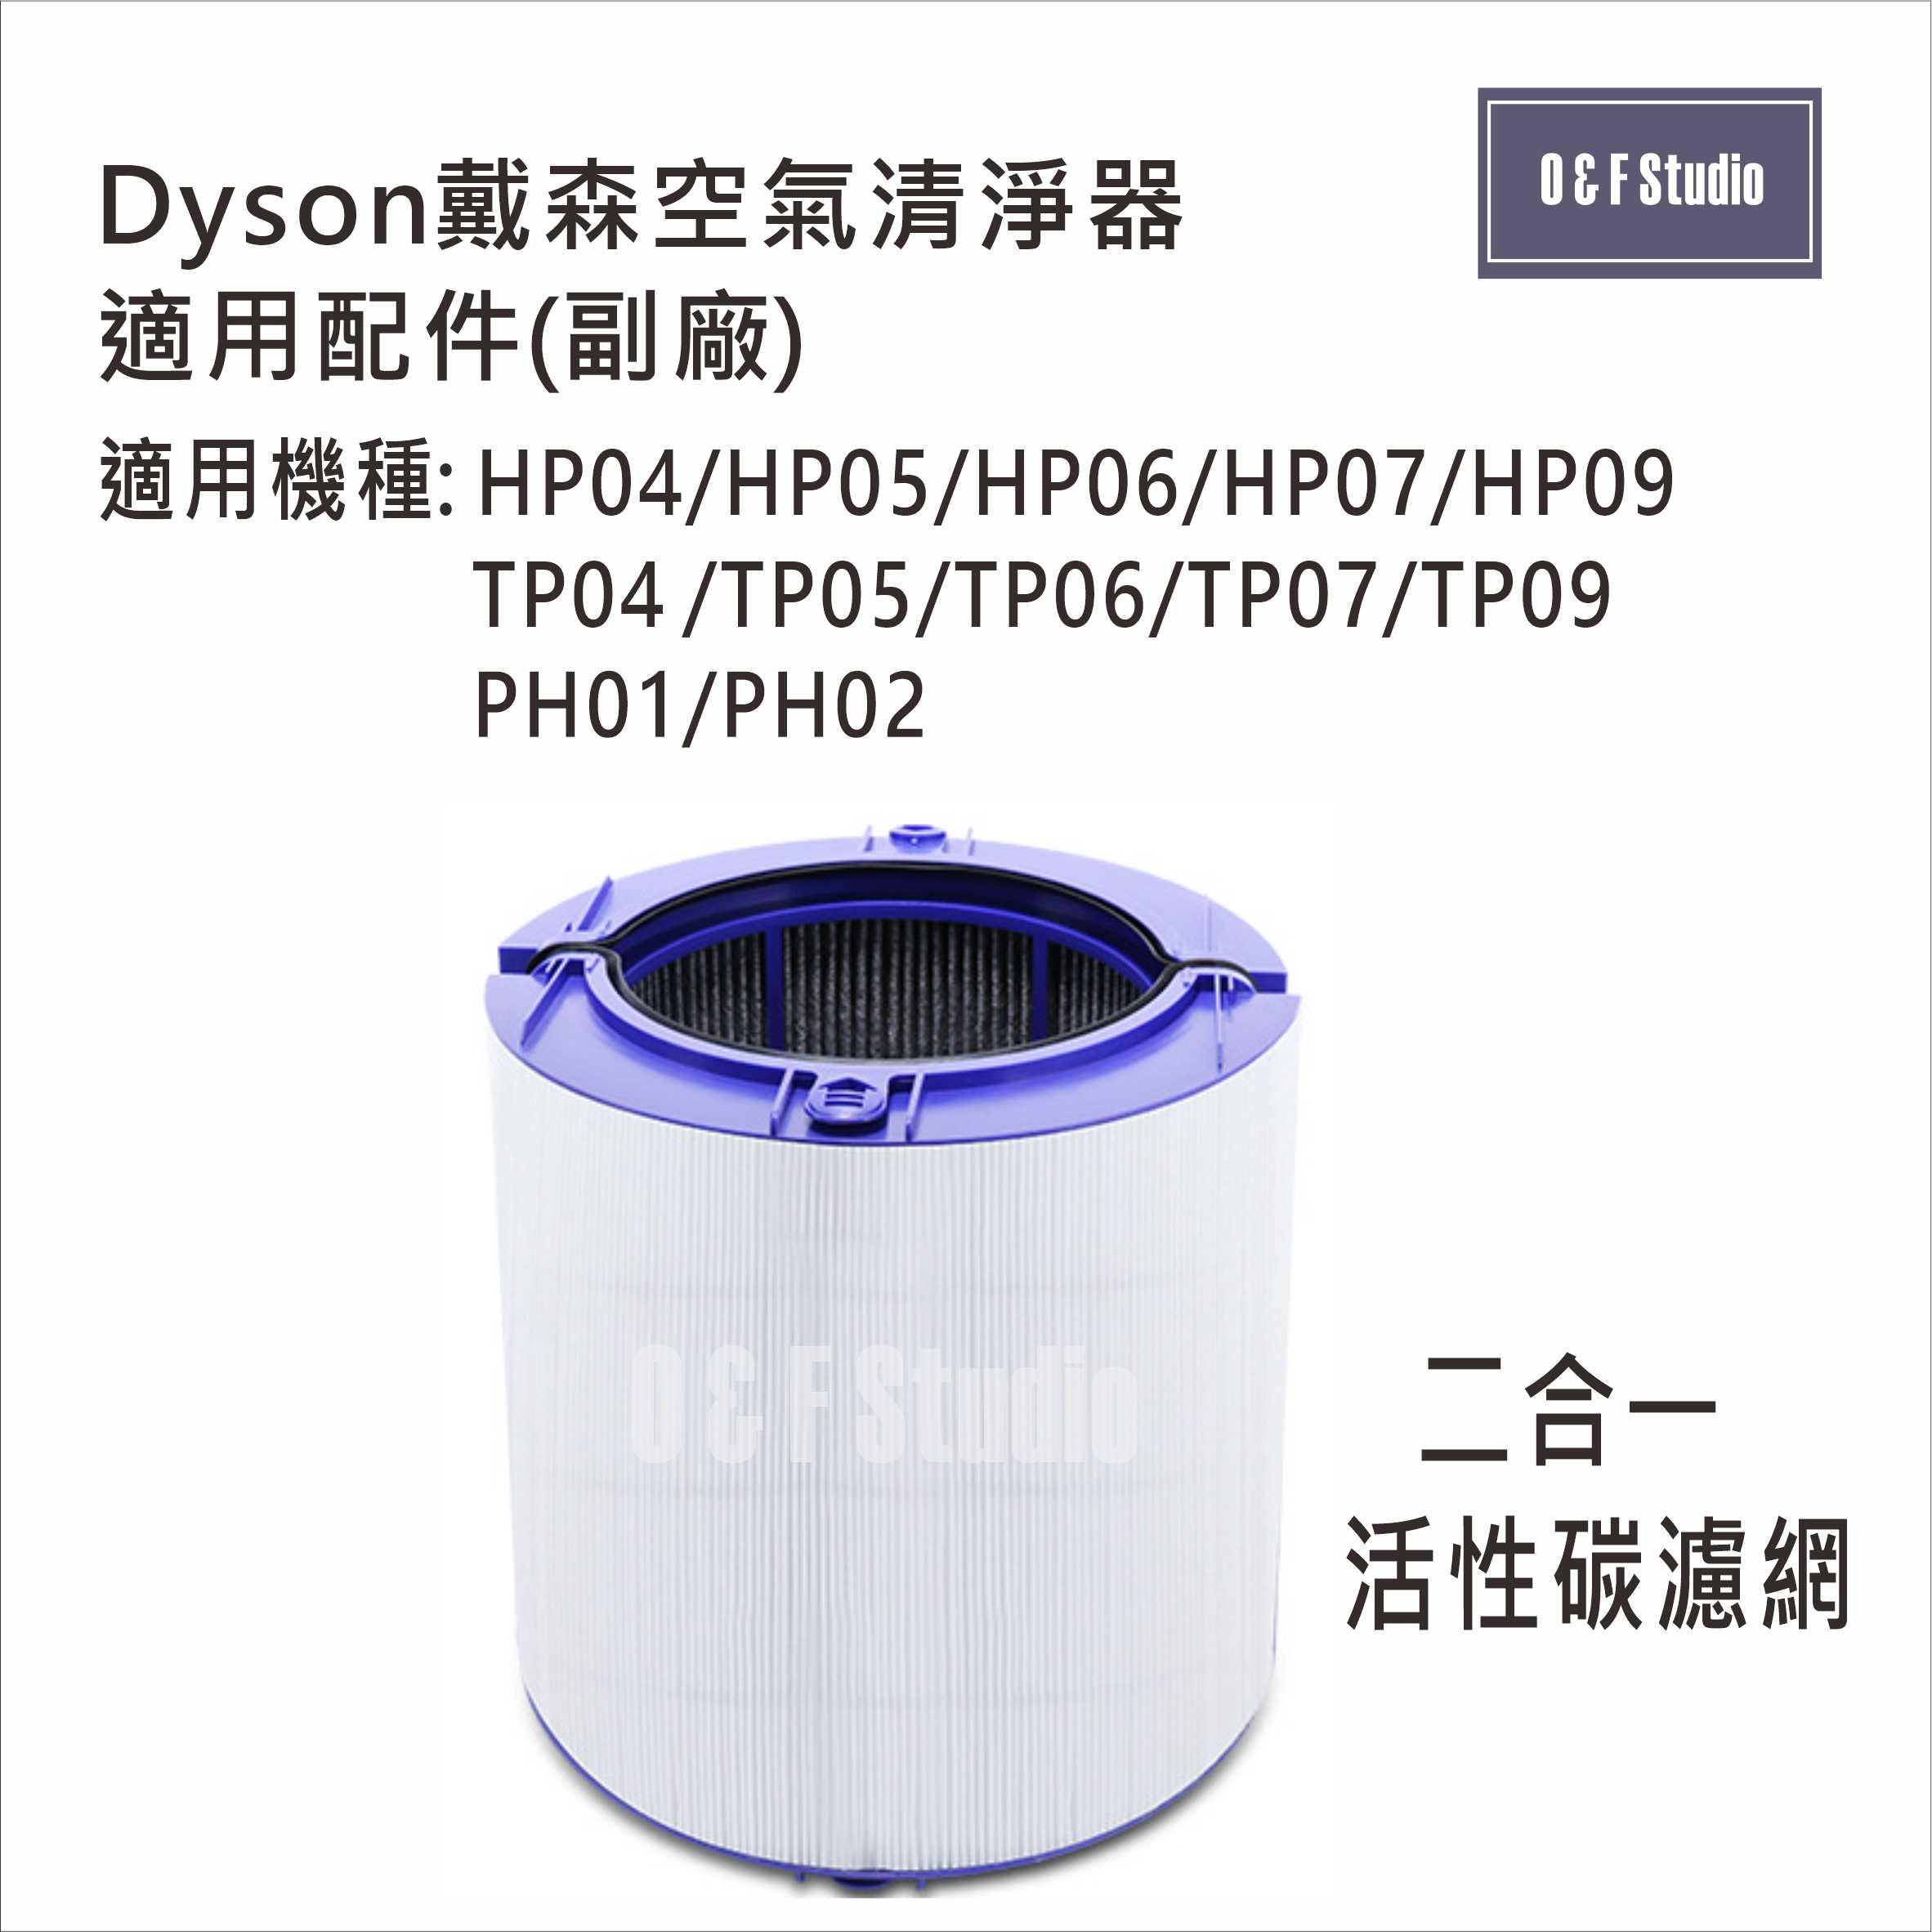 Dyson戴森空氣清淨器二合一濾網(副廠)HP/TP04,05,06,07,09,PH01,PH02活性炭濾網 台灣現貨